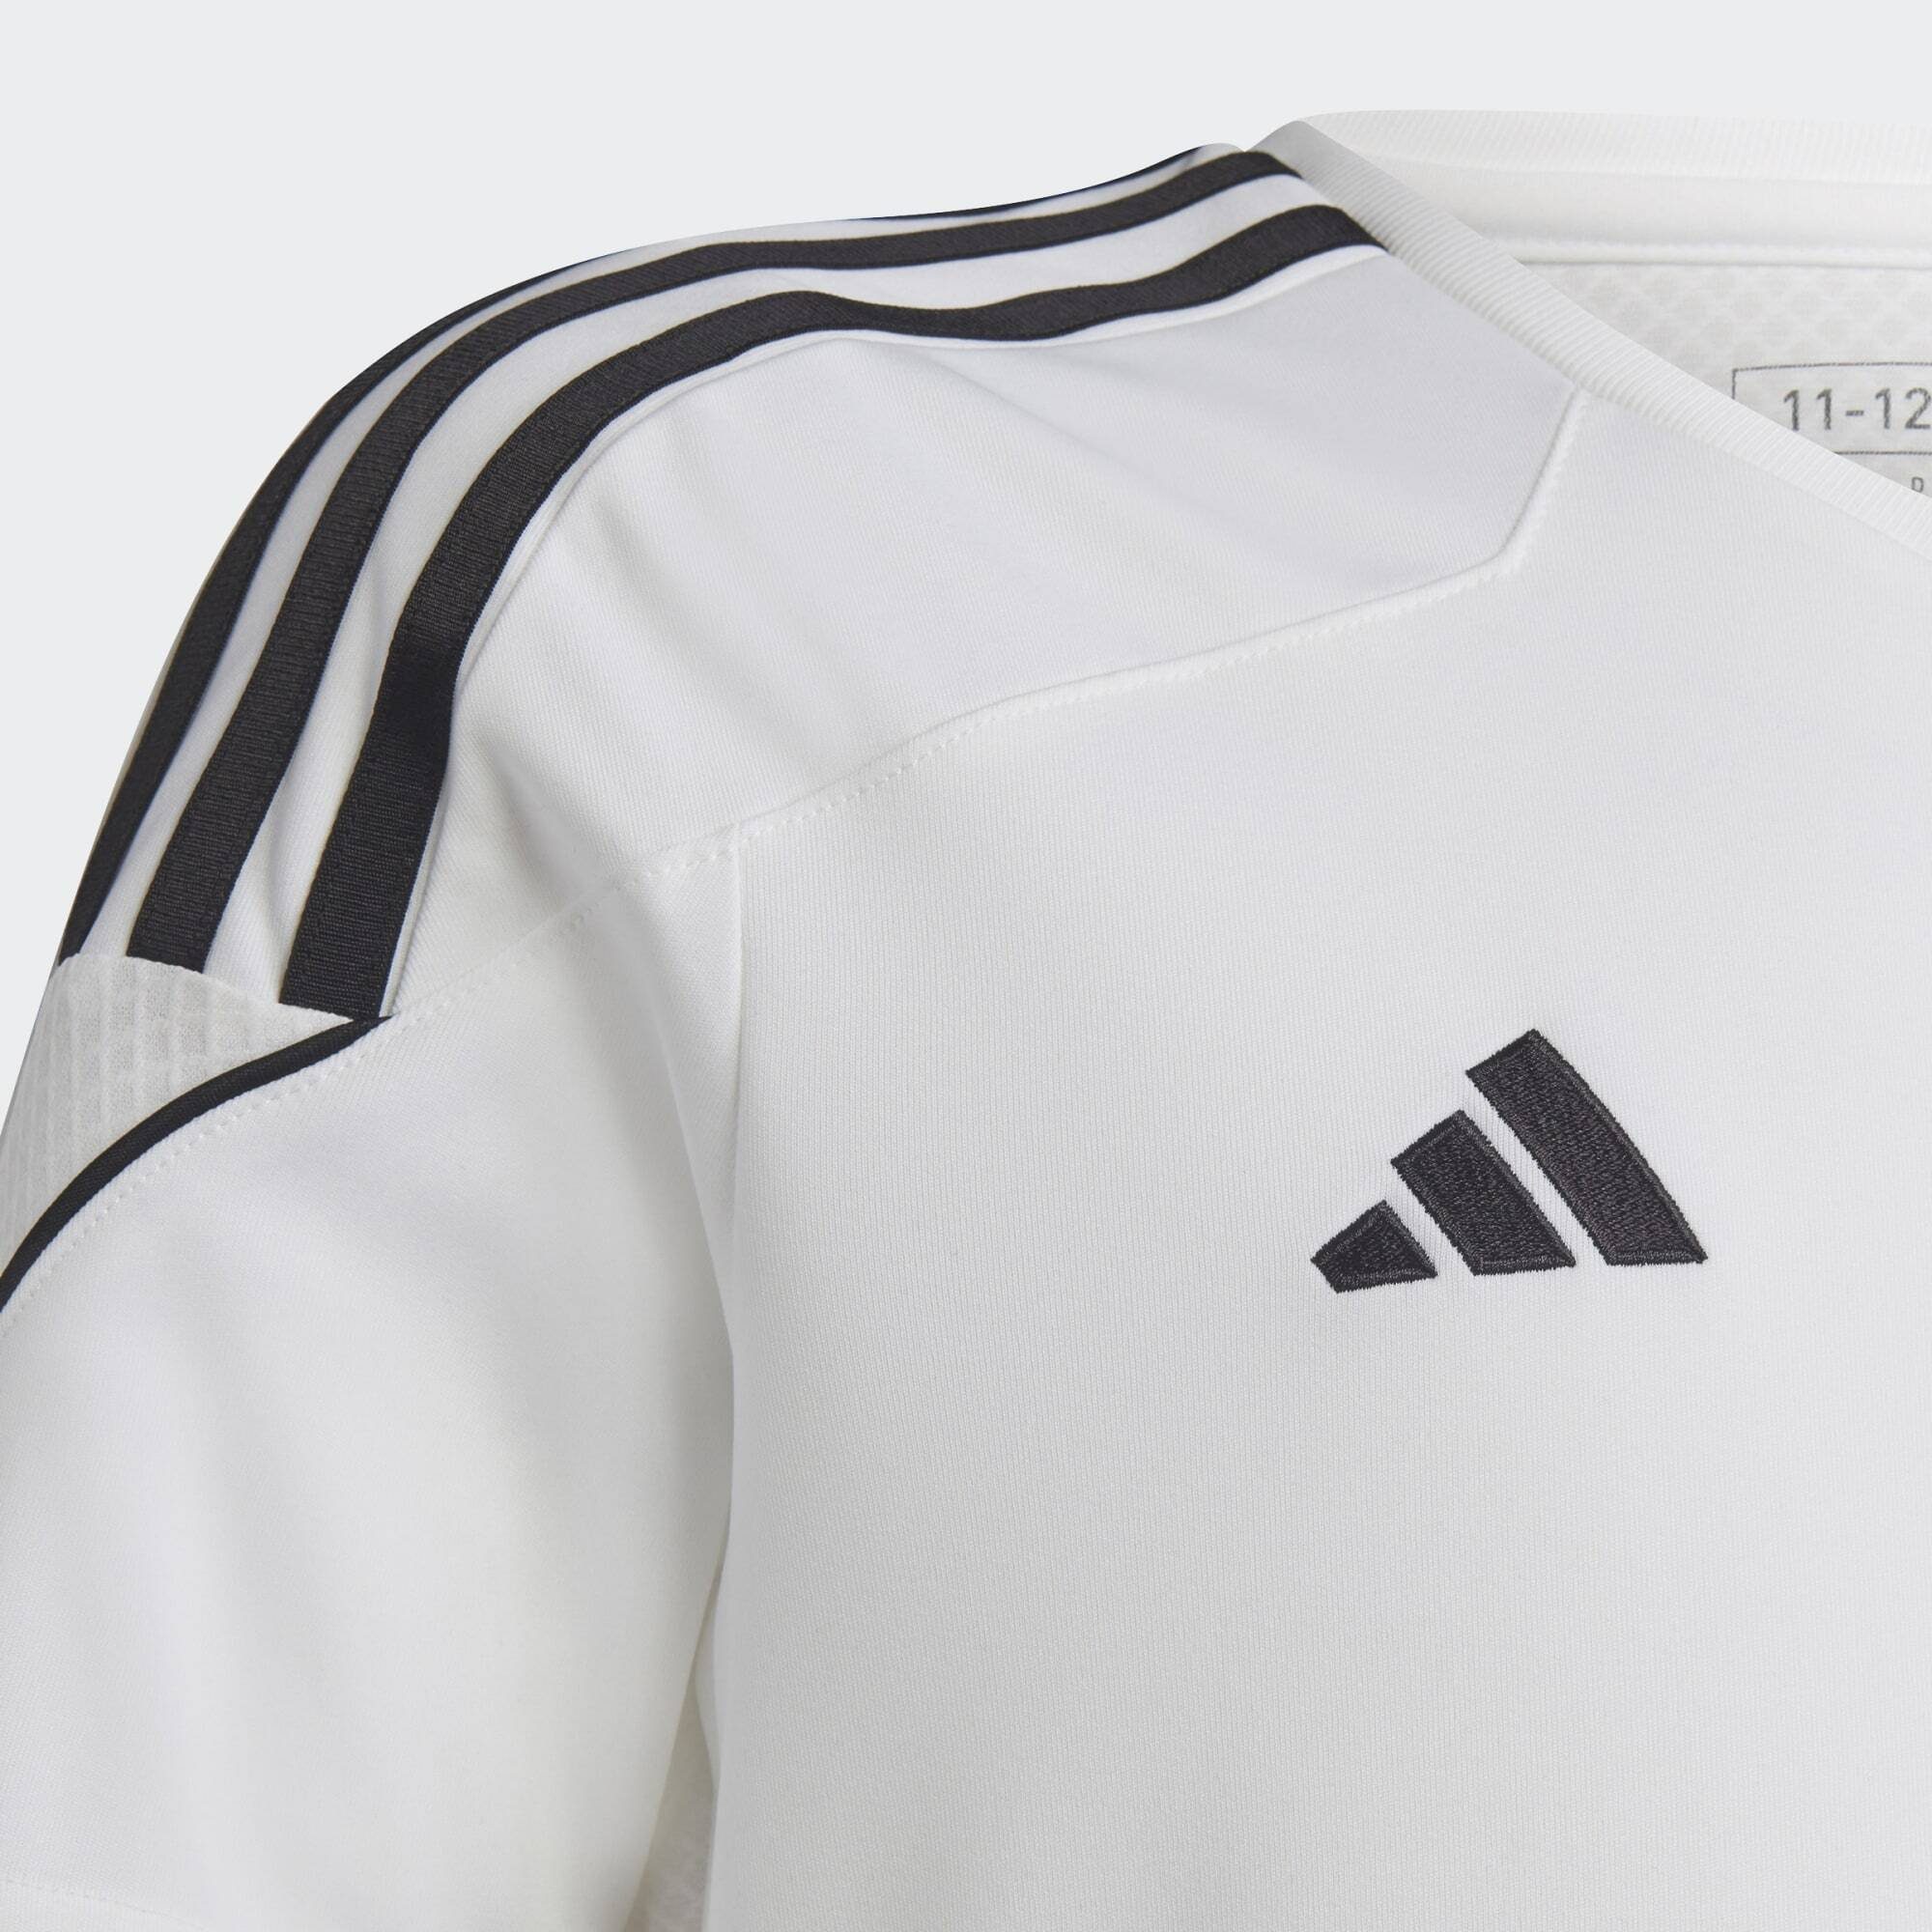 TIRO adidas Performance Black TRIKOT White Fußballtrikot / 23 LEAGUE